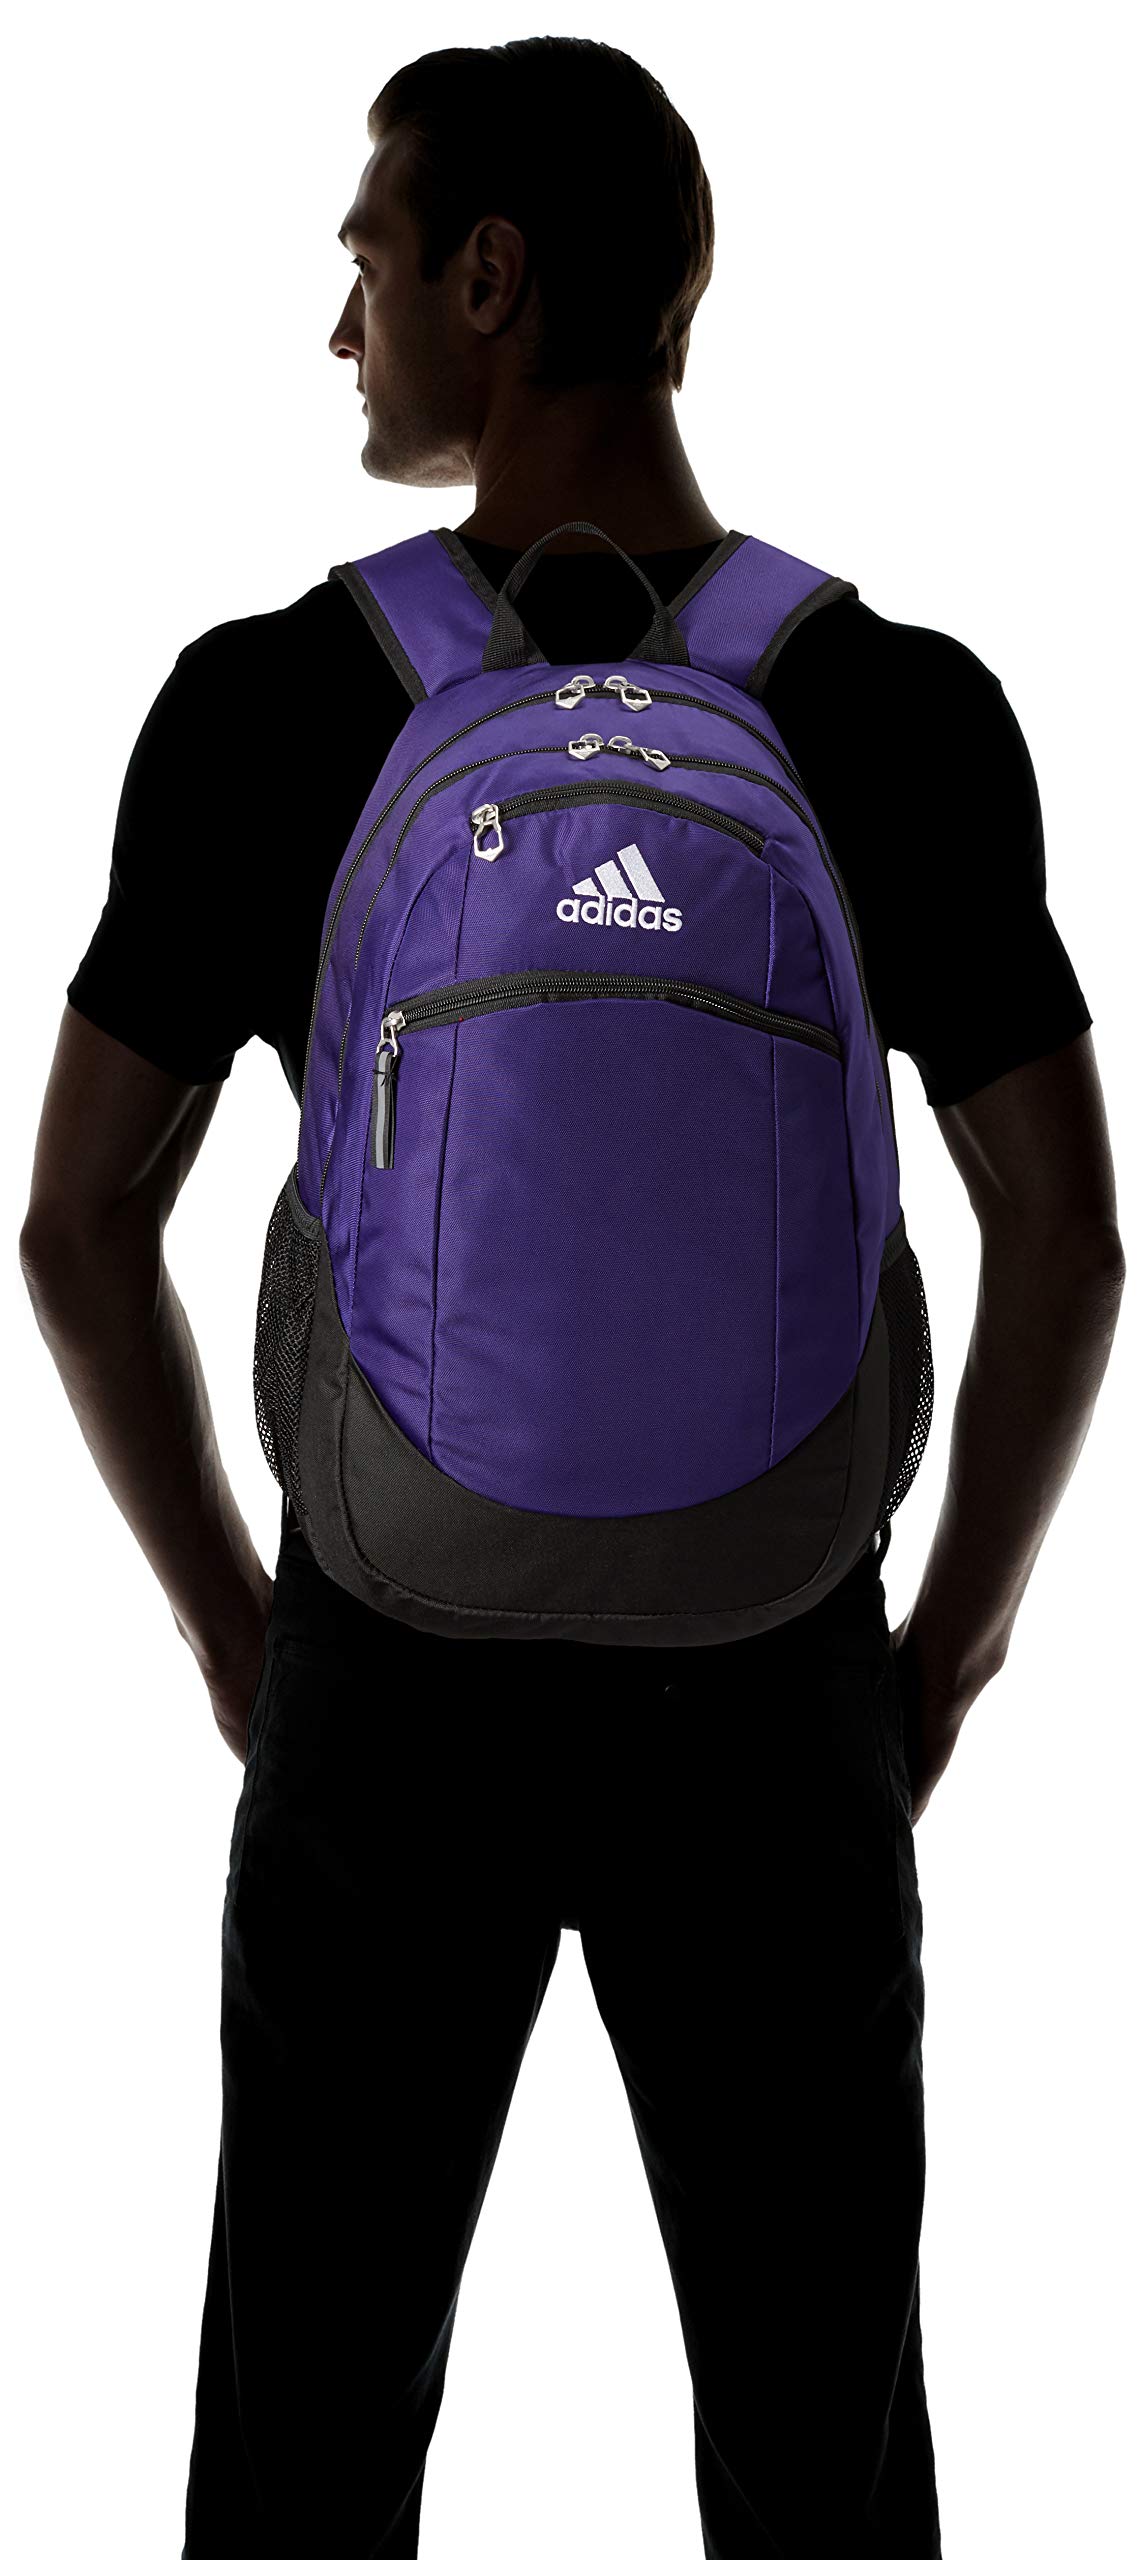 adidas Striker 2 Backpack, Team Collegiate Purple/Black/White, One Size